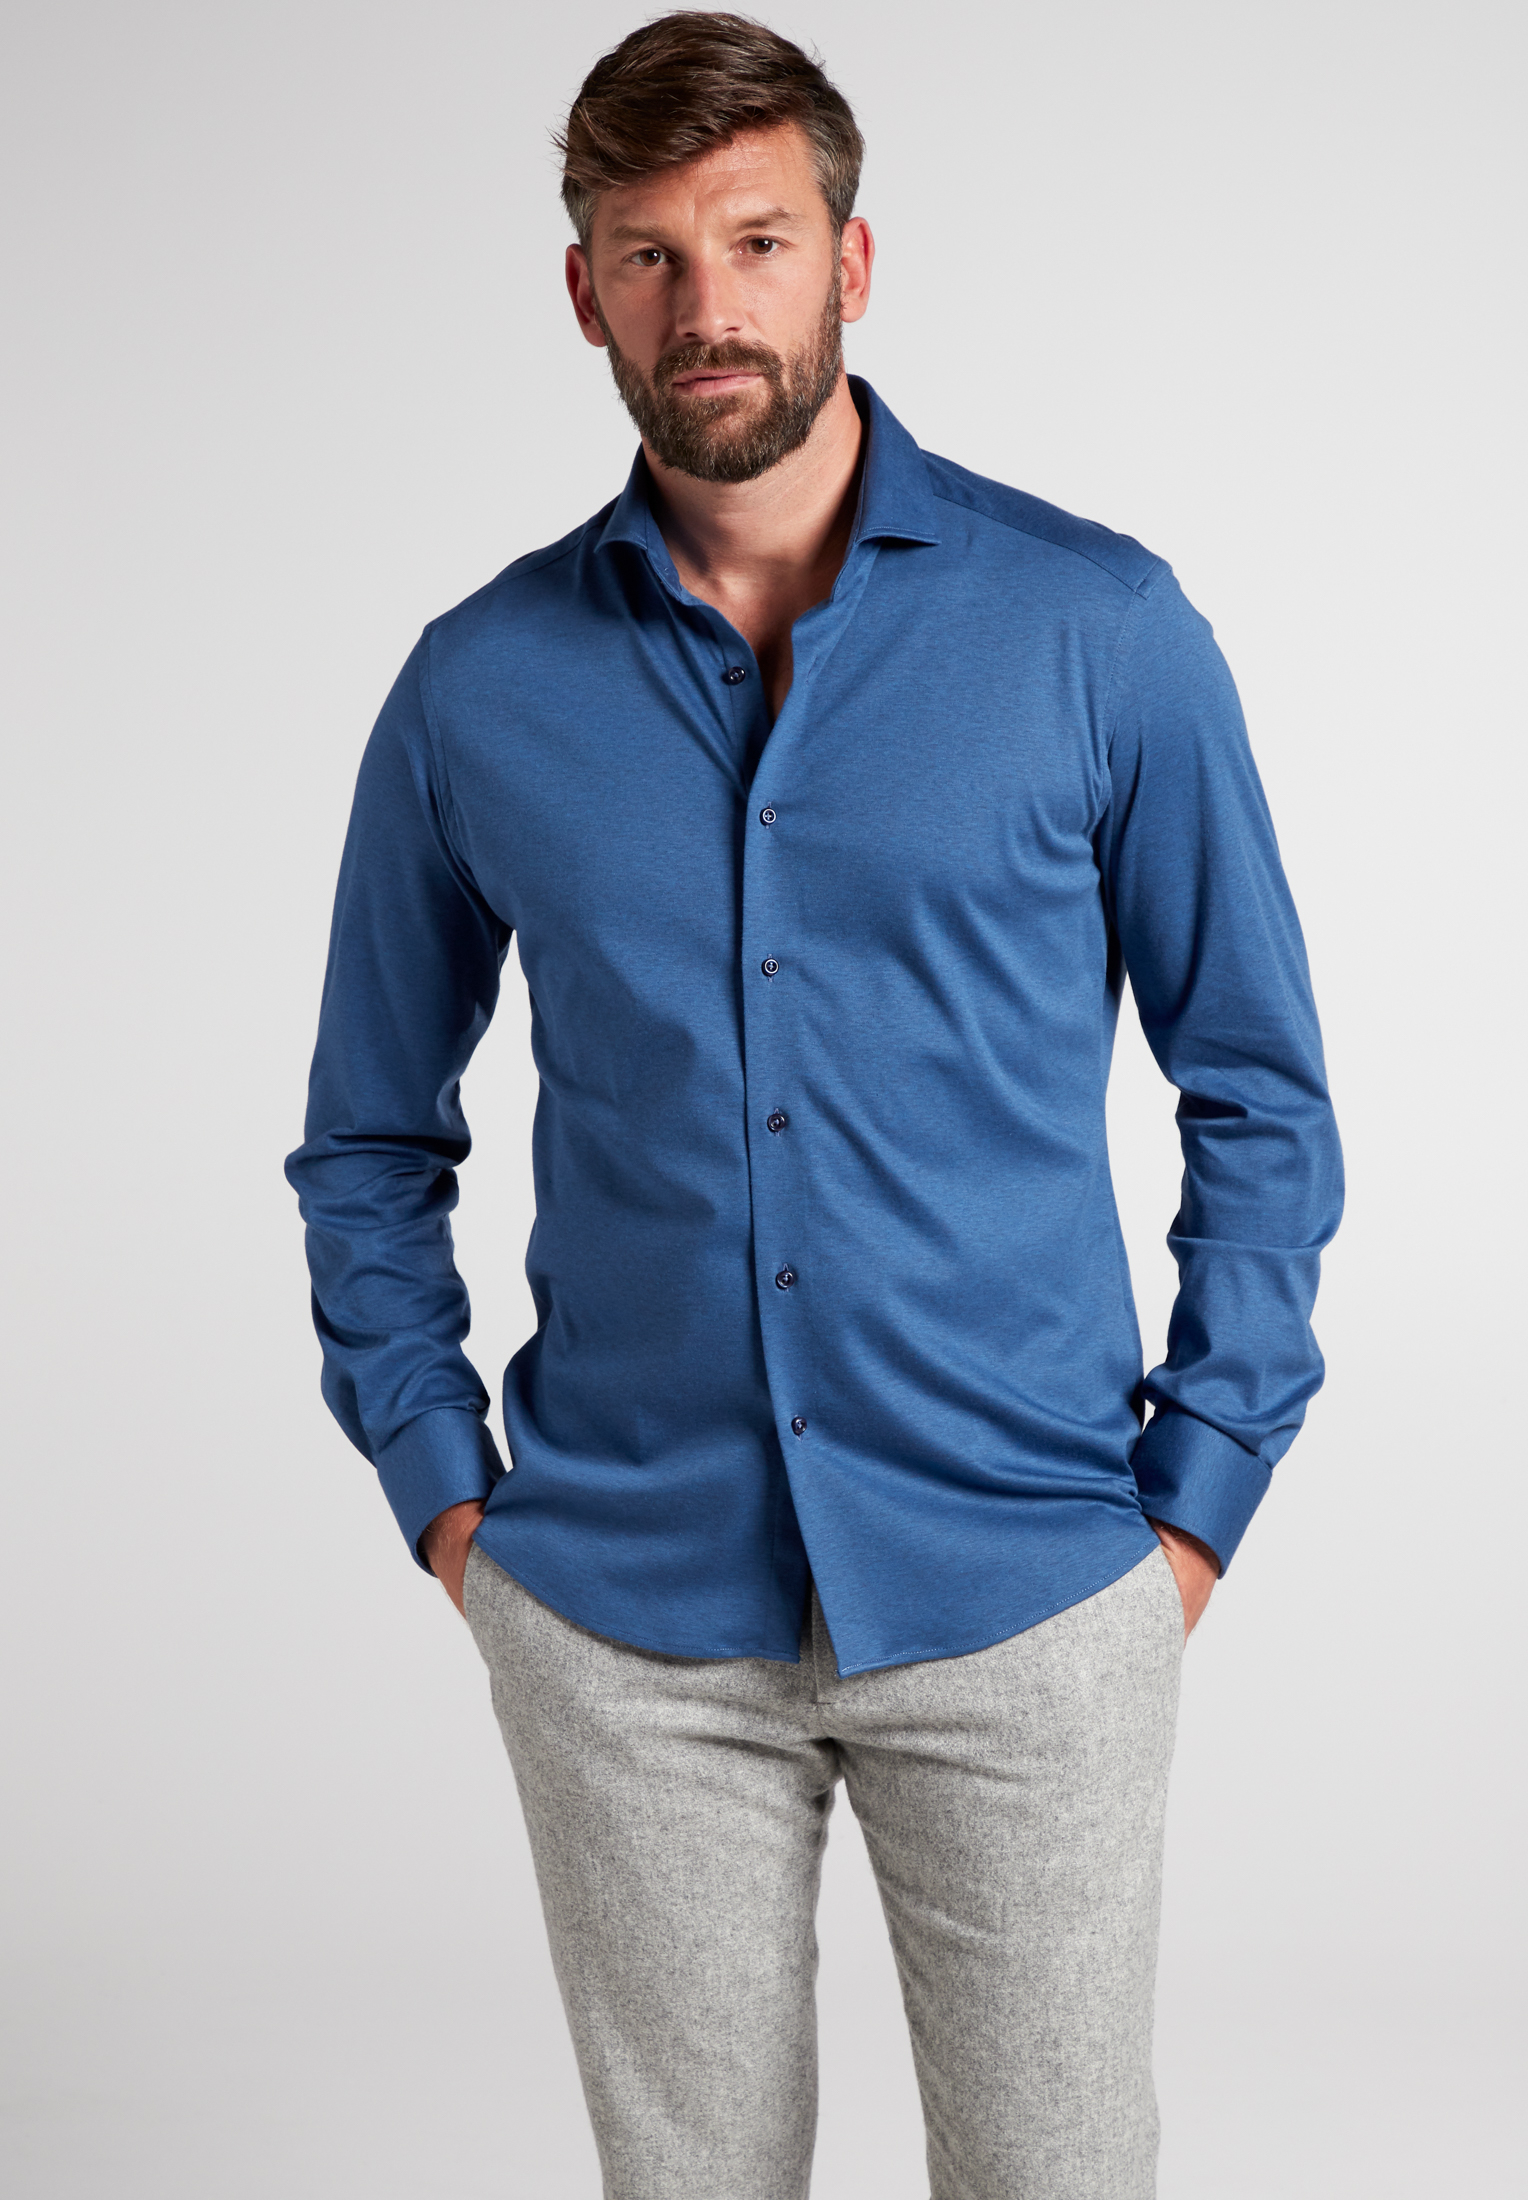 MODERN FIT Jersey Shirt in blau unifarben | blau | 47 | Langarm |  1SH00374-01-41-47-1/1